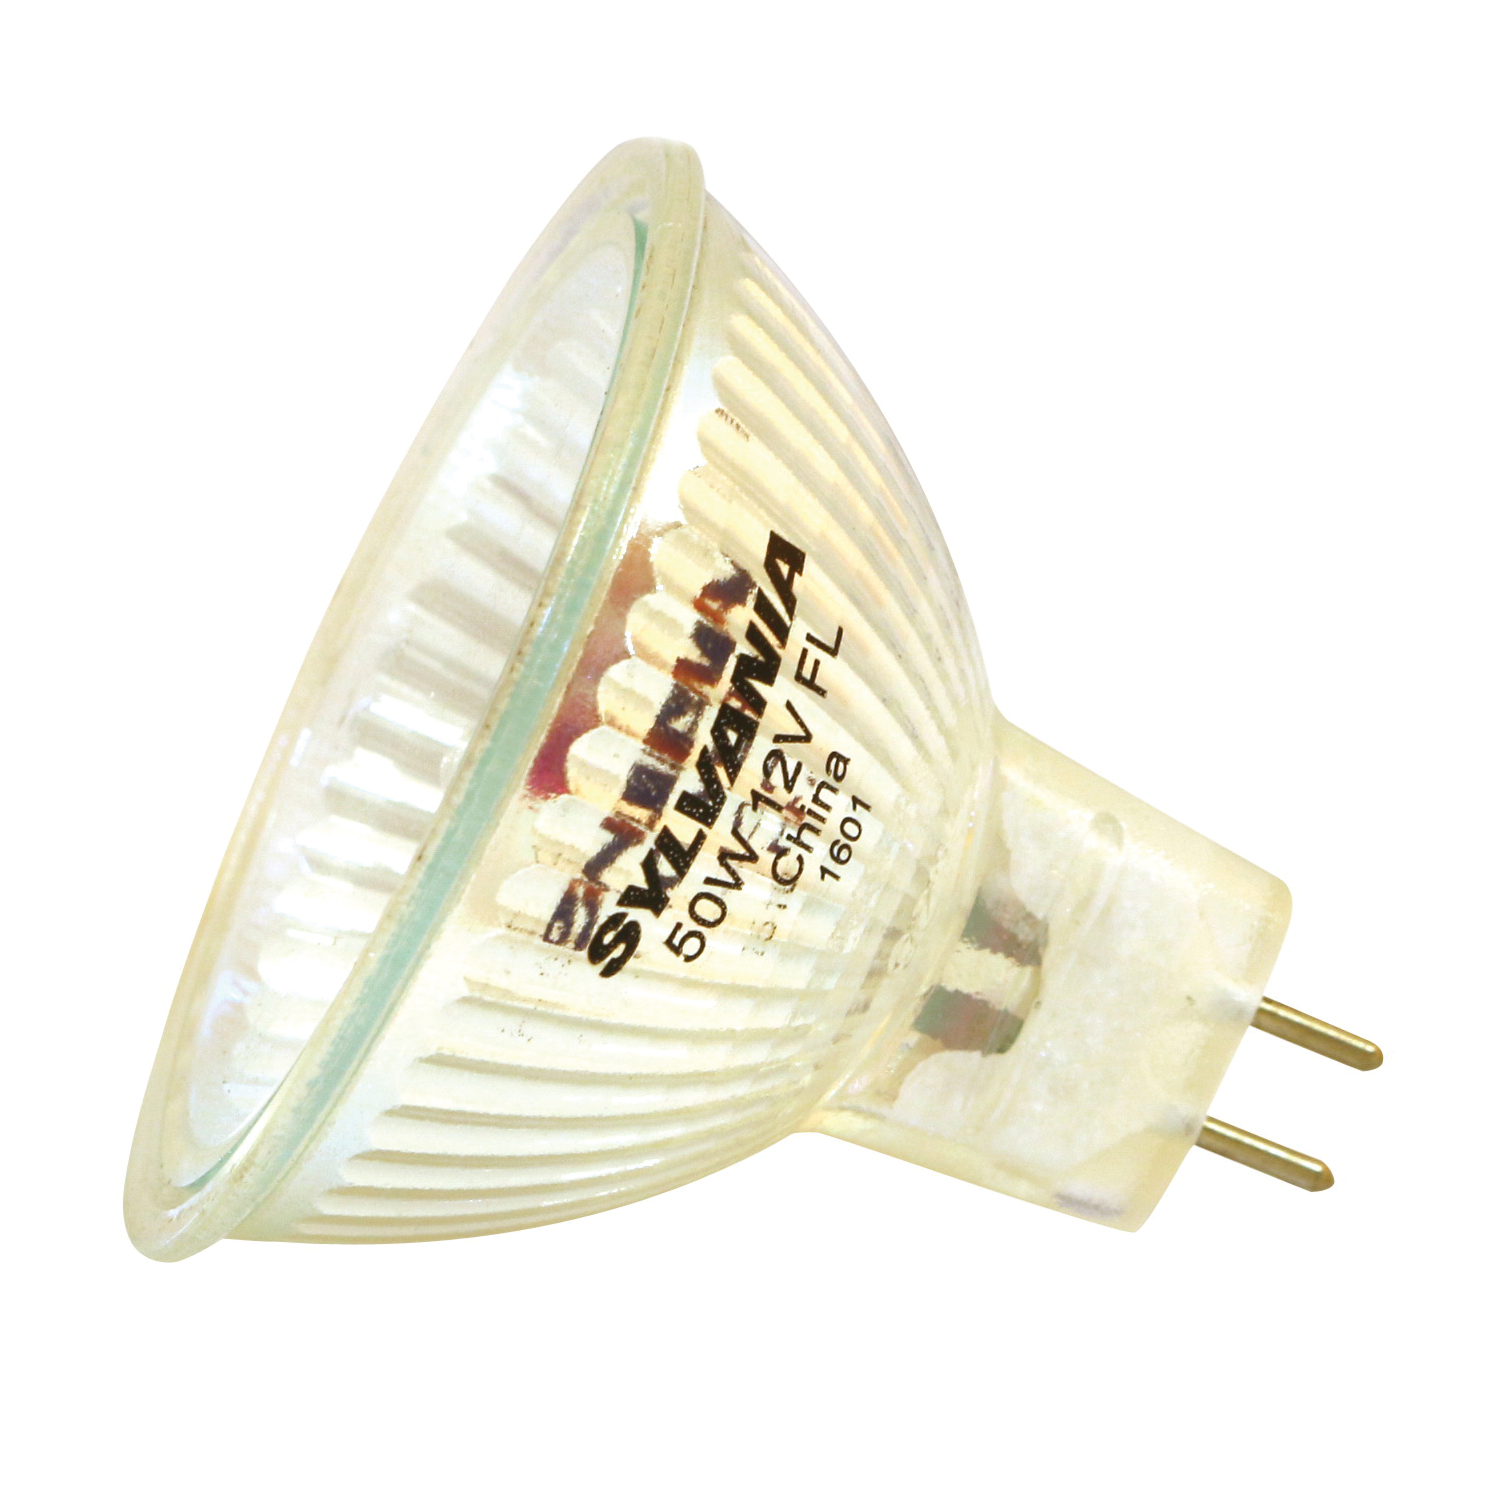 58516 Halogen Bulb, 50 W, GU5.3 Lamp Base, MR16 Lamp, 600 Lumens, 3000 K Color Temp, 2000 hr Average Life